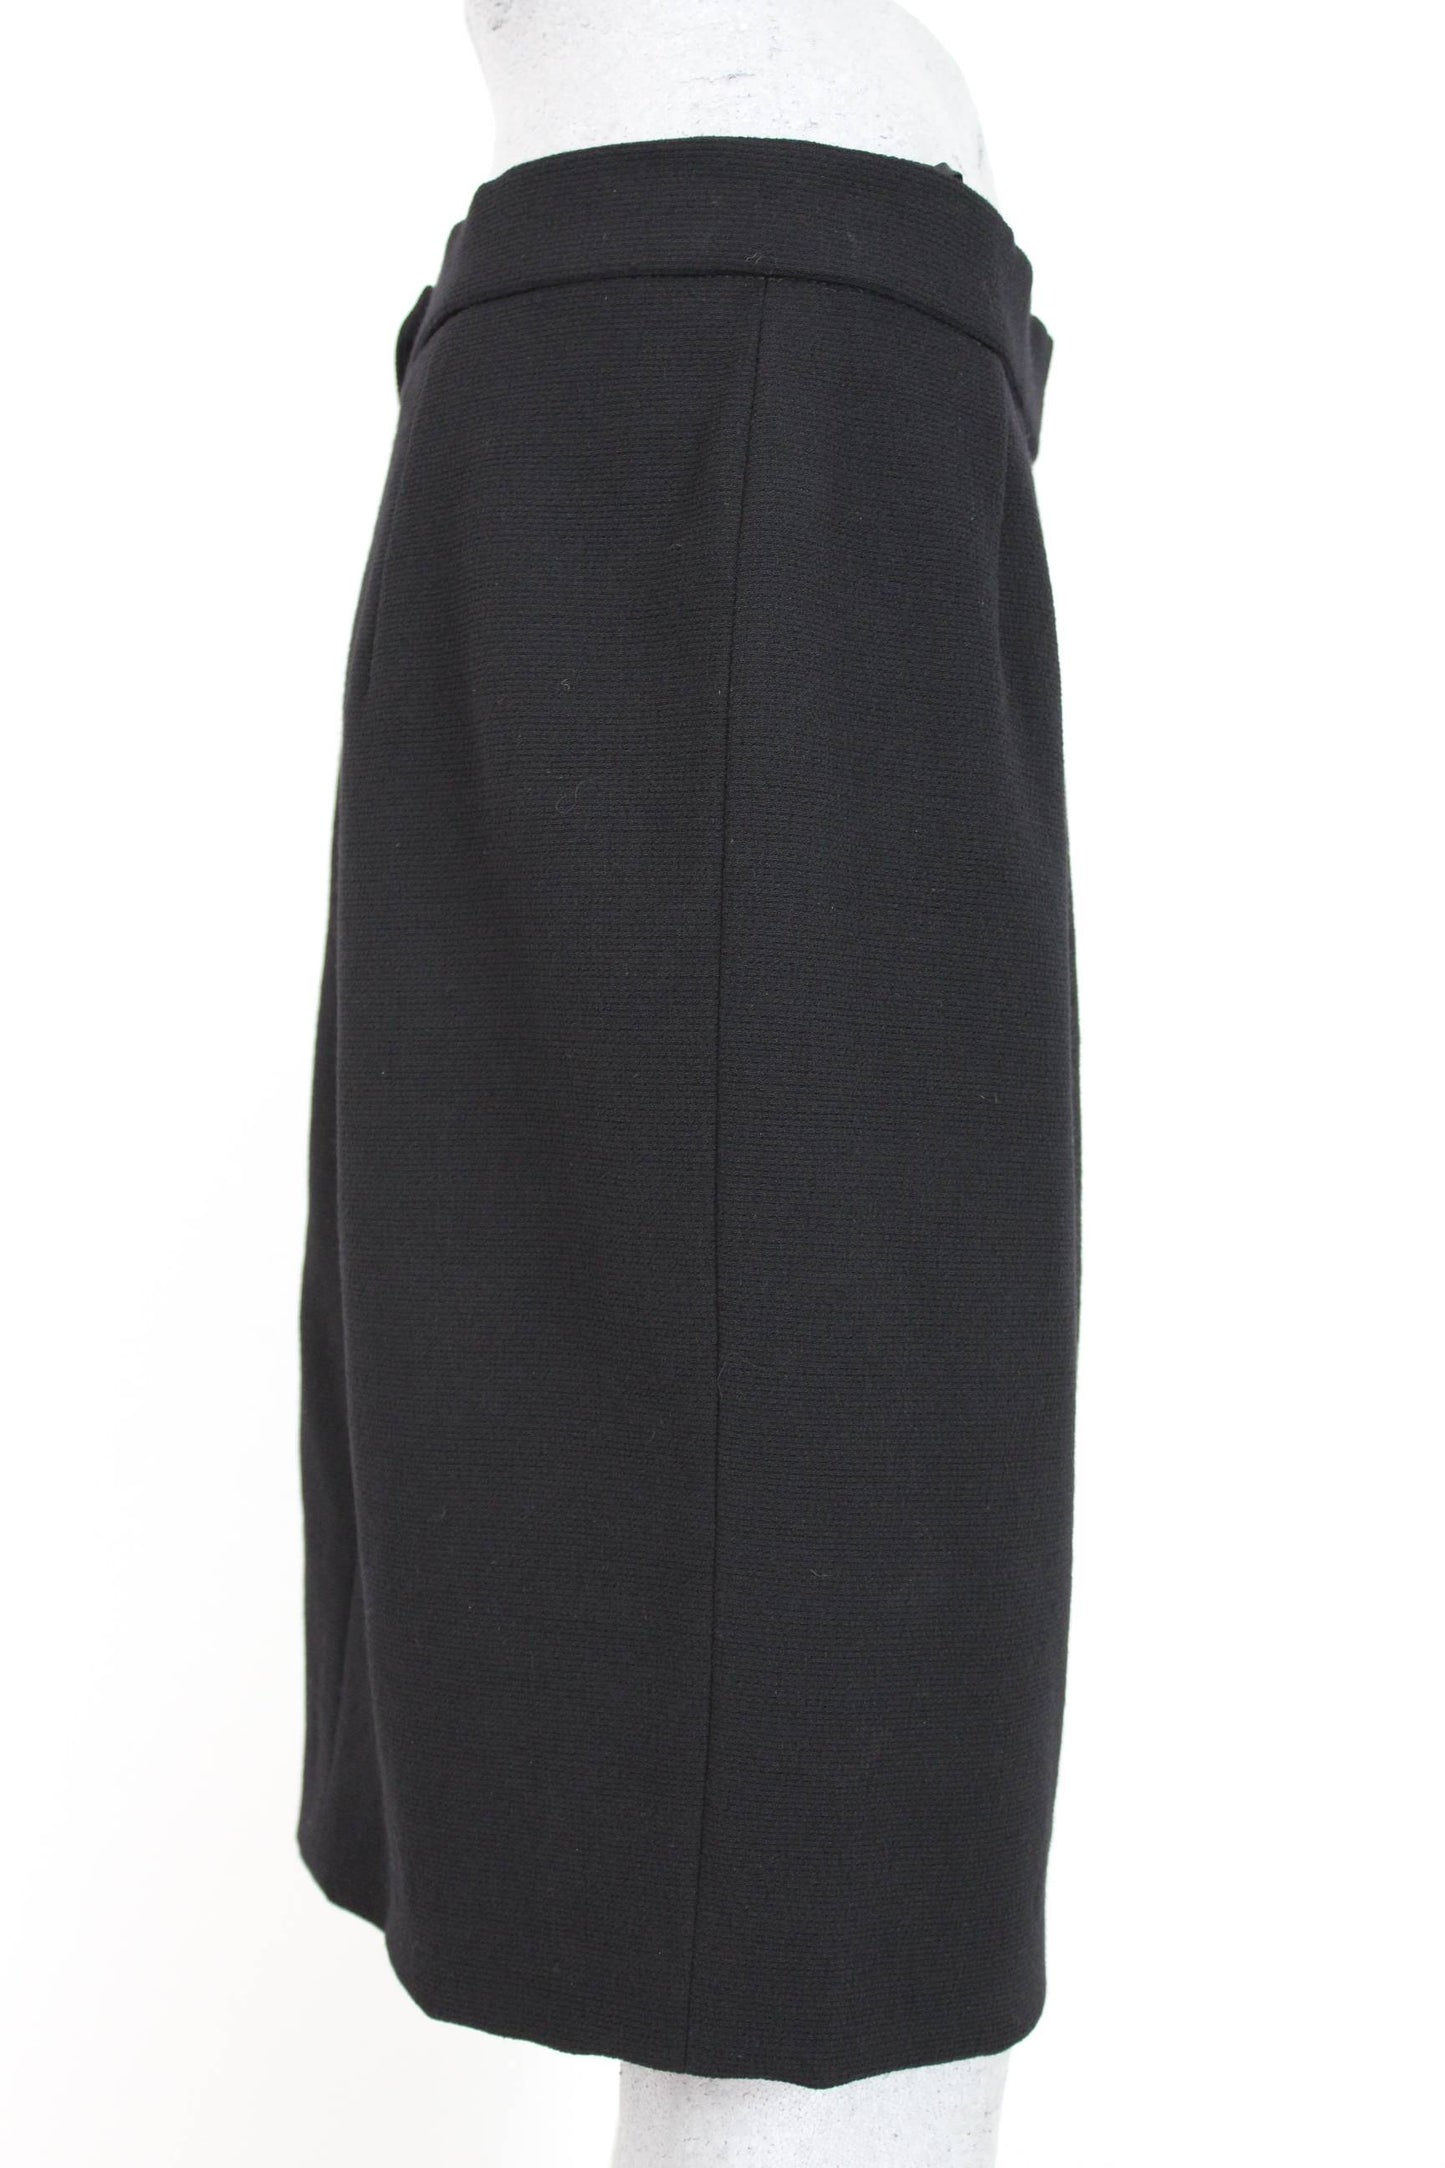 Christian Dior Black Vintage Evening Skirt